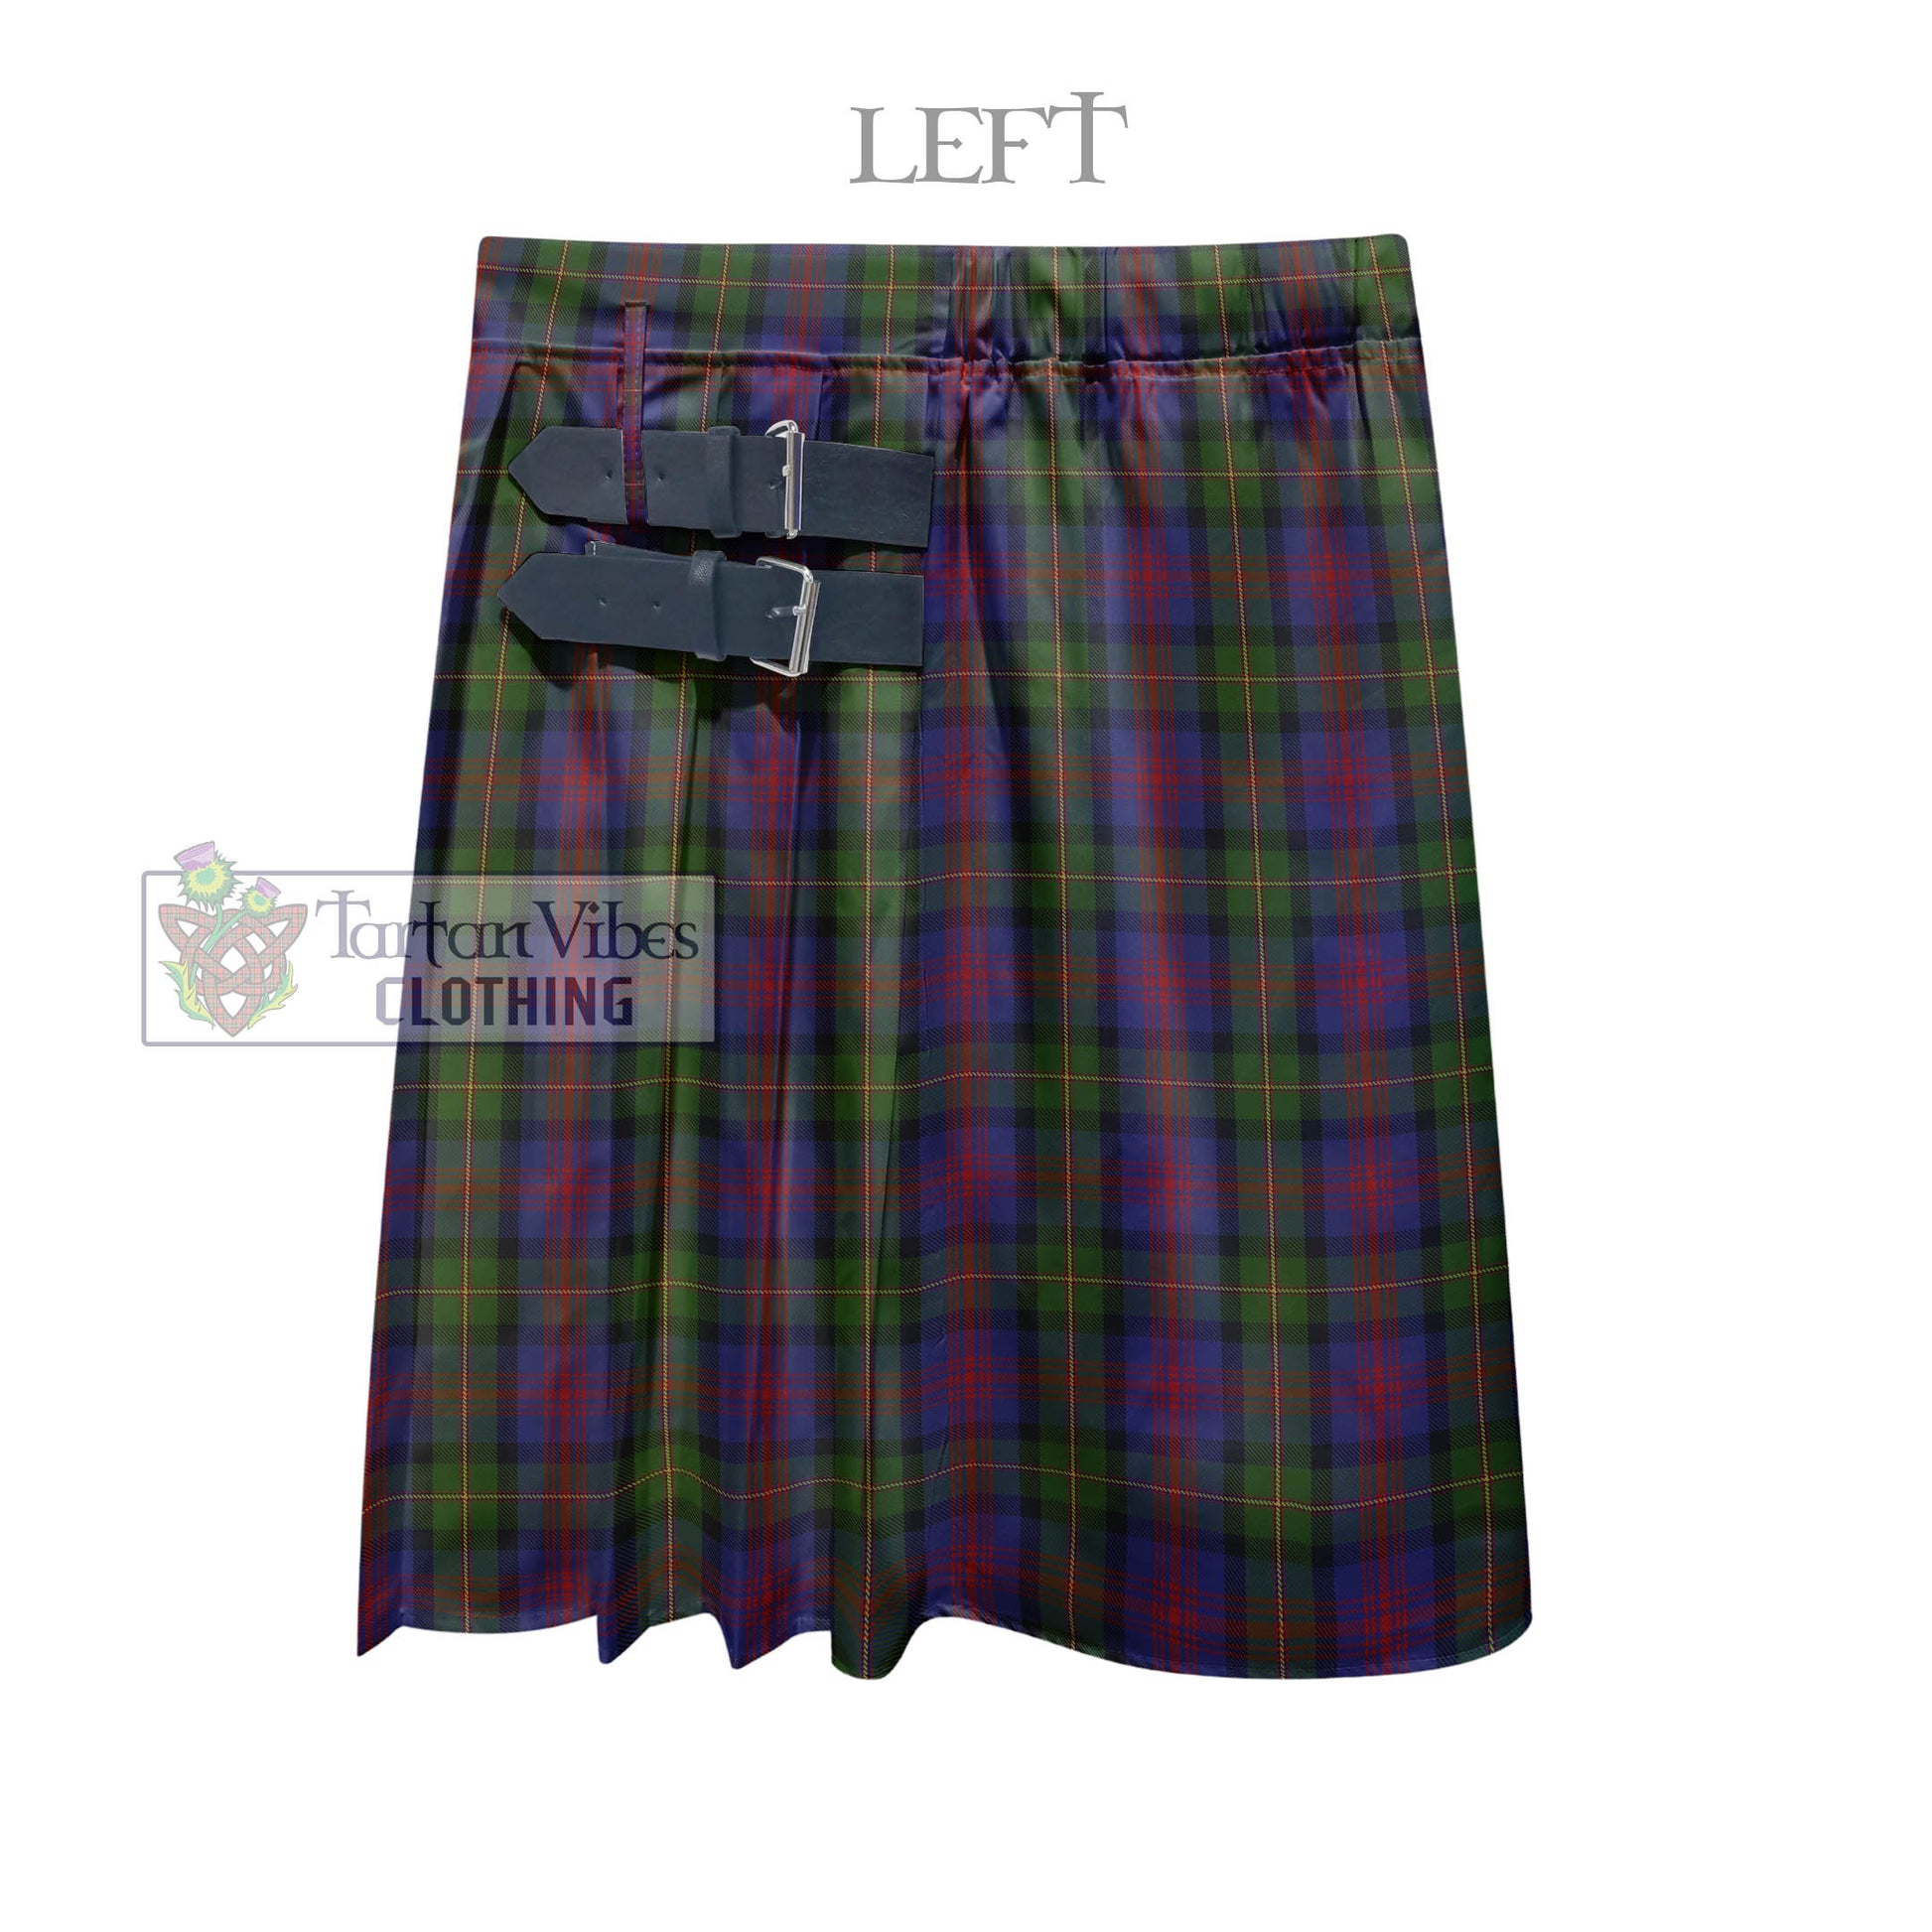 Tartan Vibes Clothing MacLennan Tartan Men's Pleated Skirt - Fashion Casual Retro Scottish Style